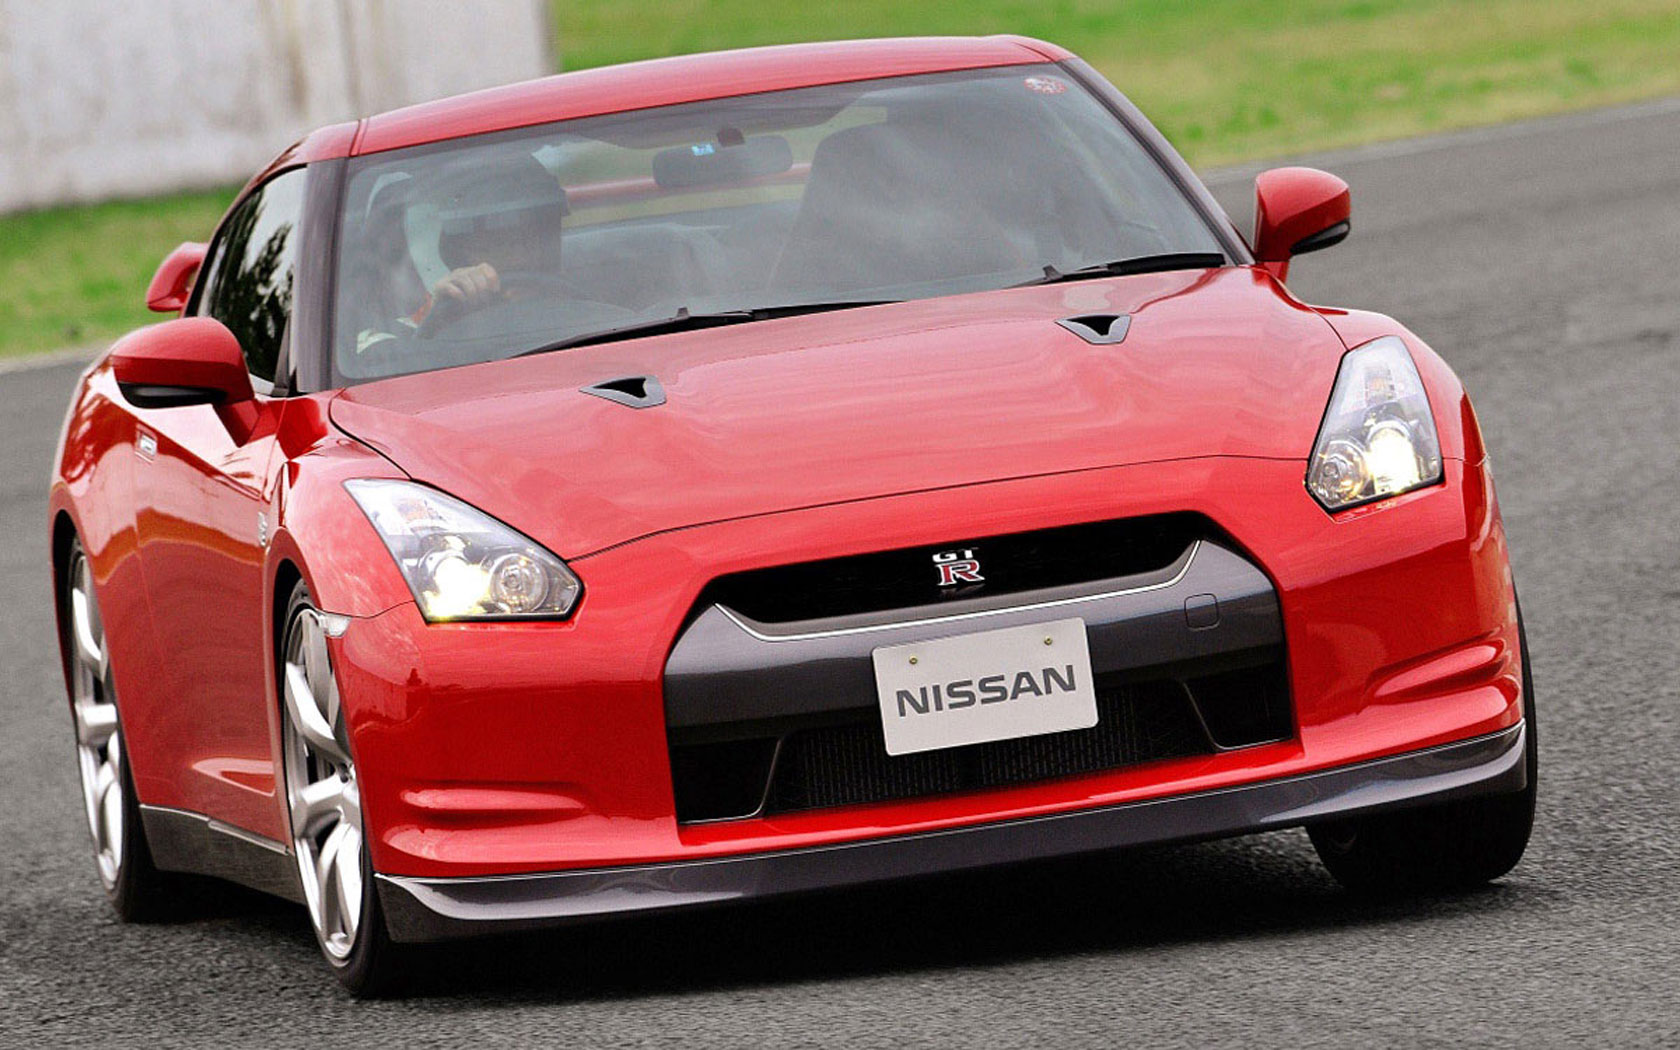  Nissan GT-R (2007-2010)